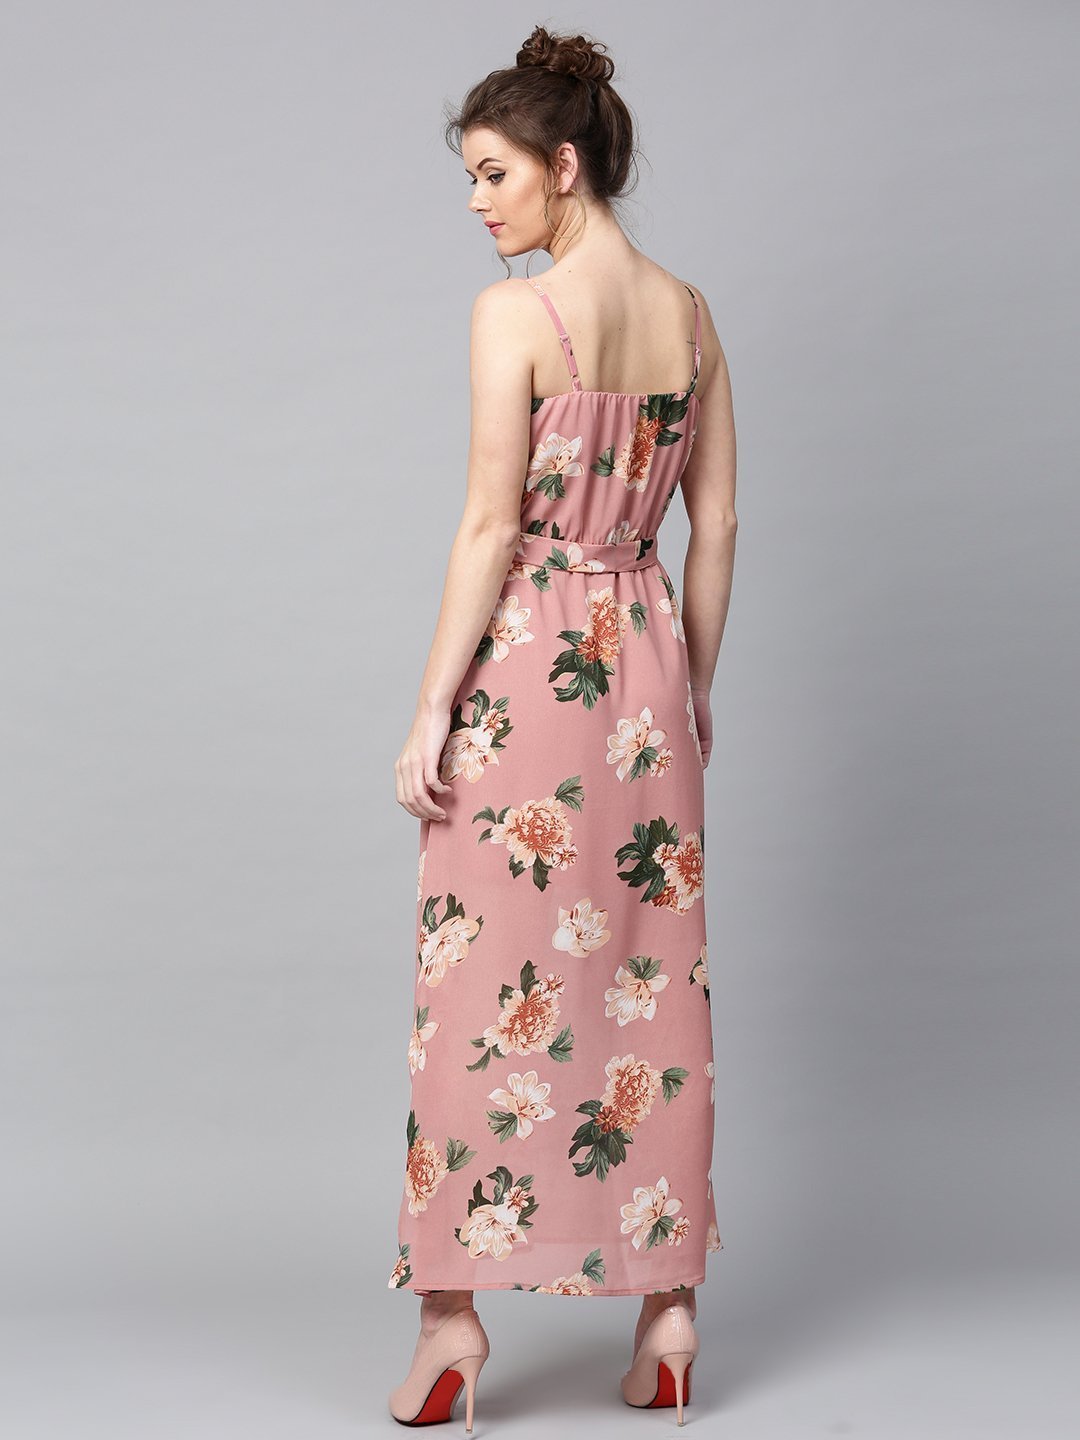 Dress Star - Dress - Floral Printed Maxi Dress - Dusty Pink And Green - 11518762643465-SASSAFRAS-Women-Pink-Printed-Maxi-Dress-8201518762643321-5_d18434ad-42ec-40a7-a6fe-c8c82d21f69a